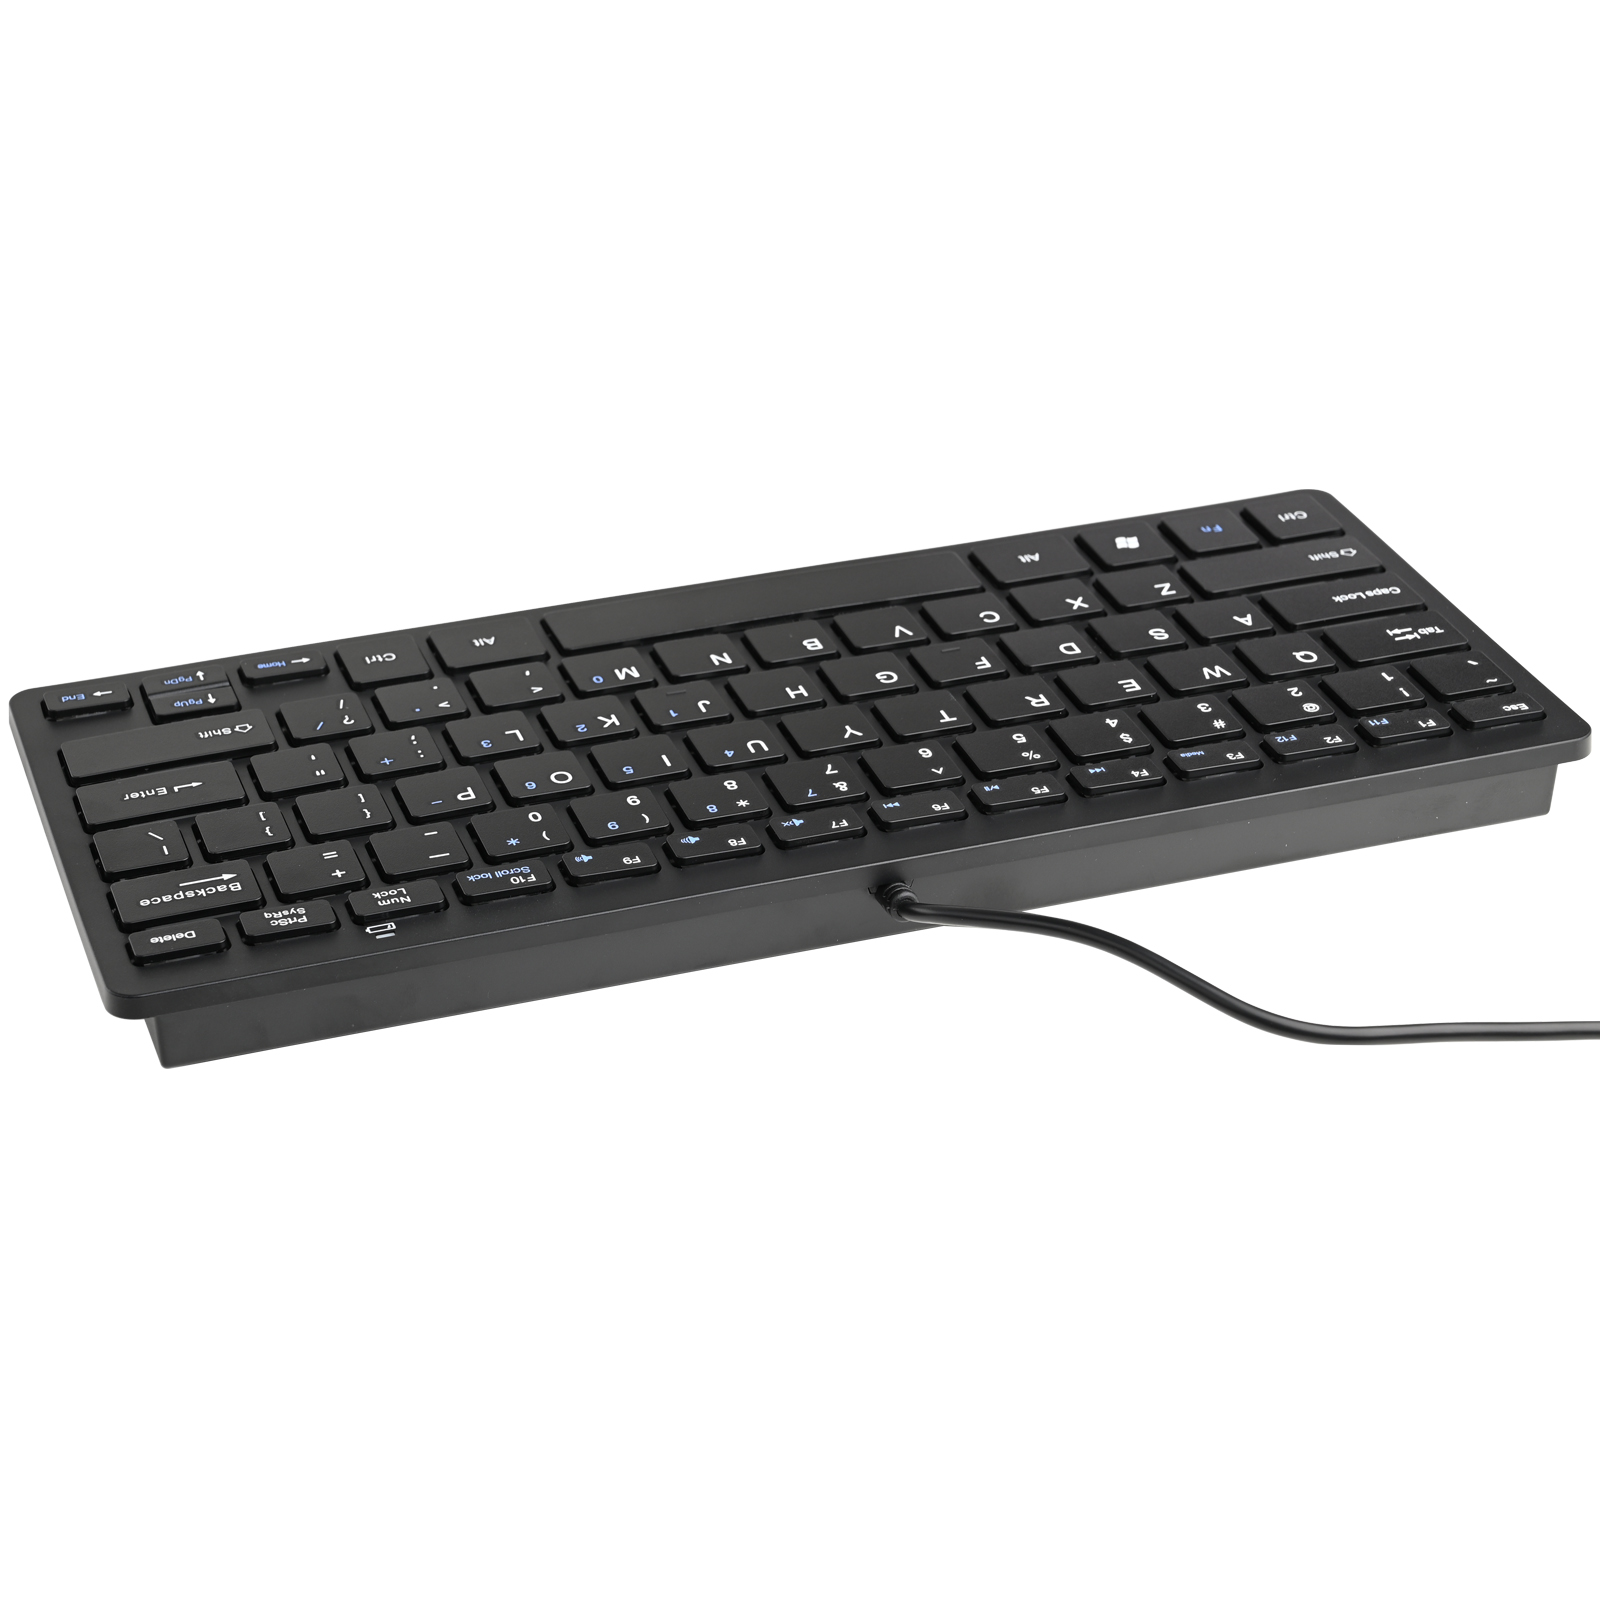 iKKEGOL Slim 78Key USB Compact Chocolate Keyboard